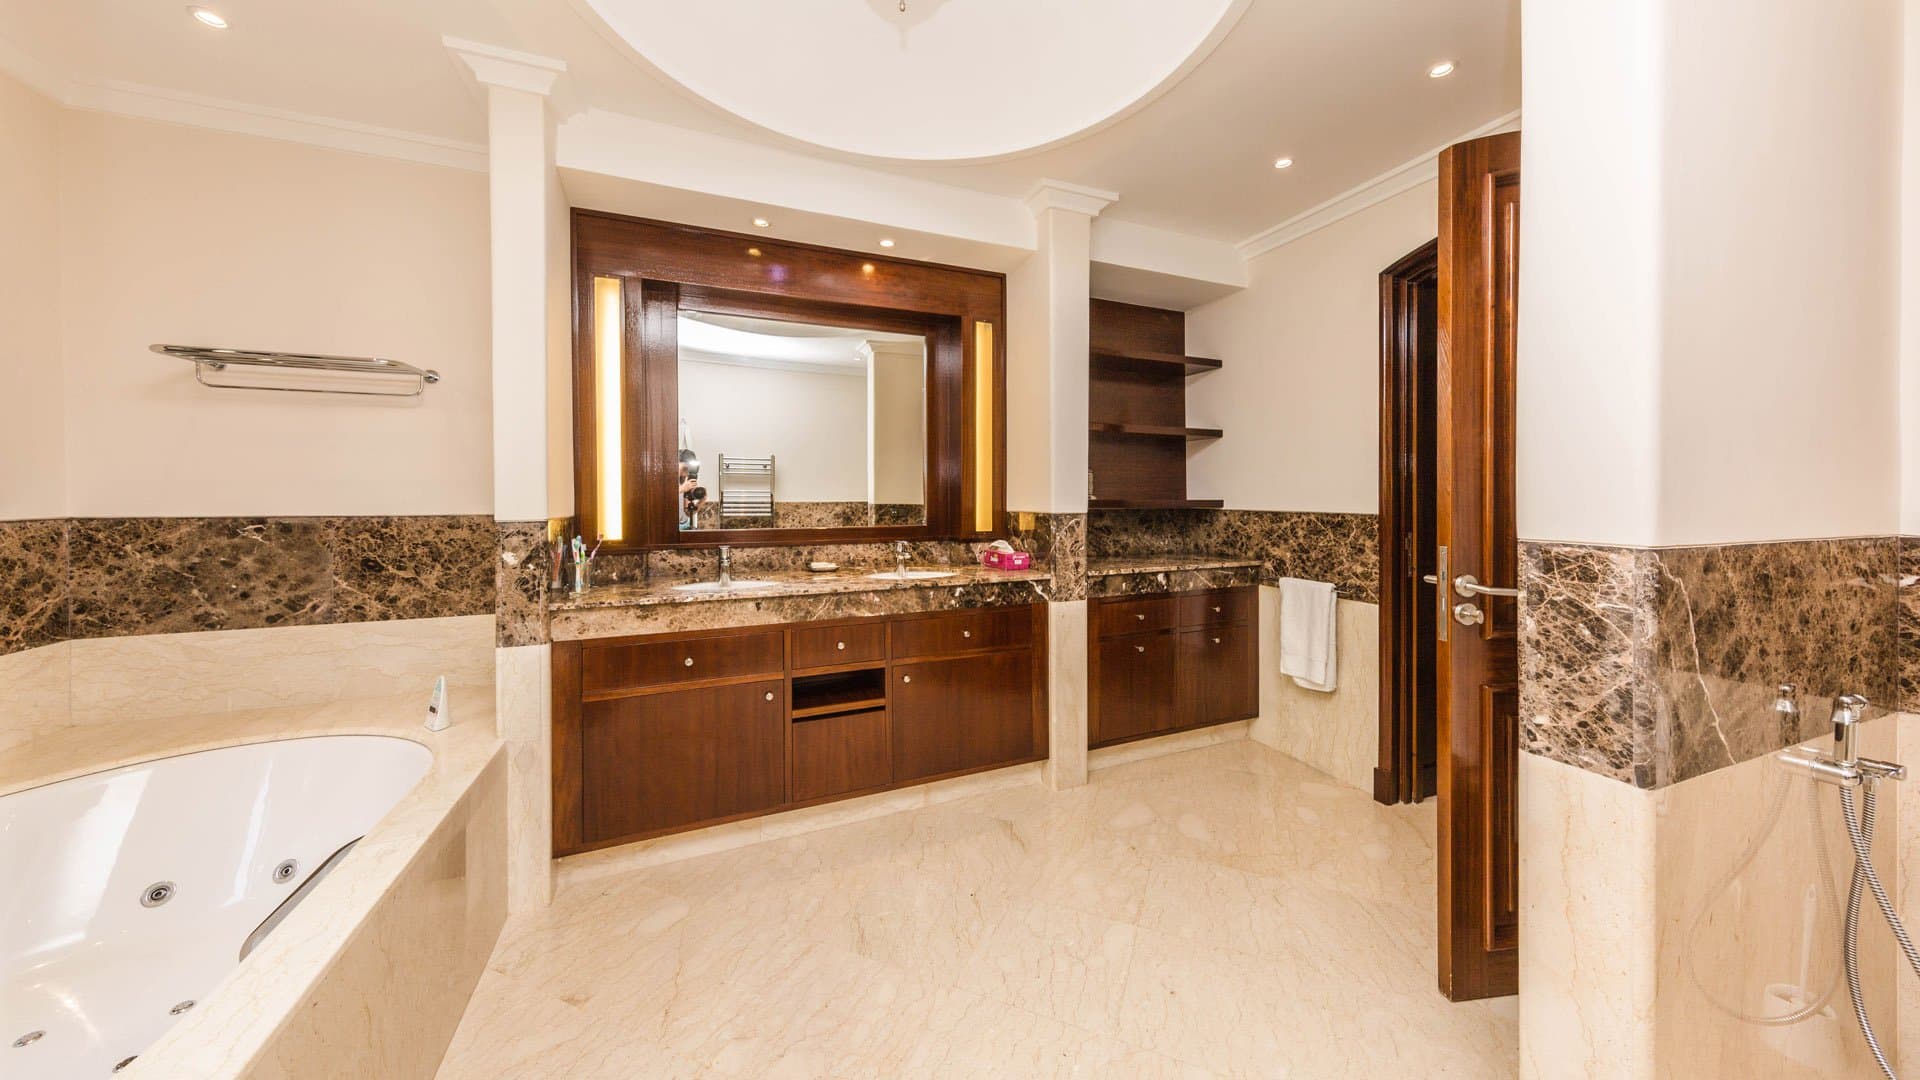 6 Bedroom Villa For Sale Marrakech Lp08699 2d9cedefdc8f040.jpg